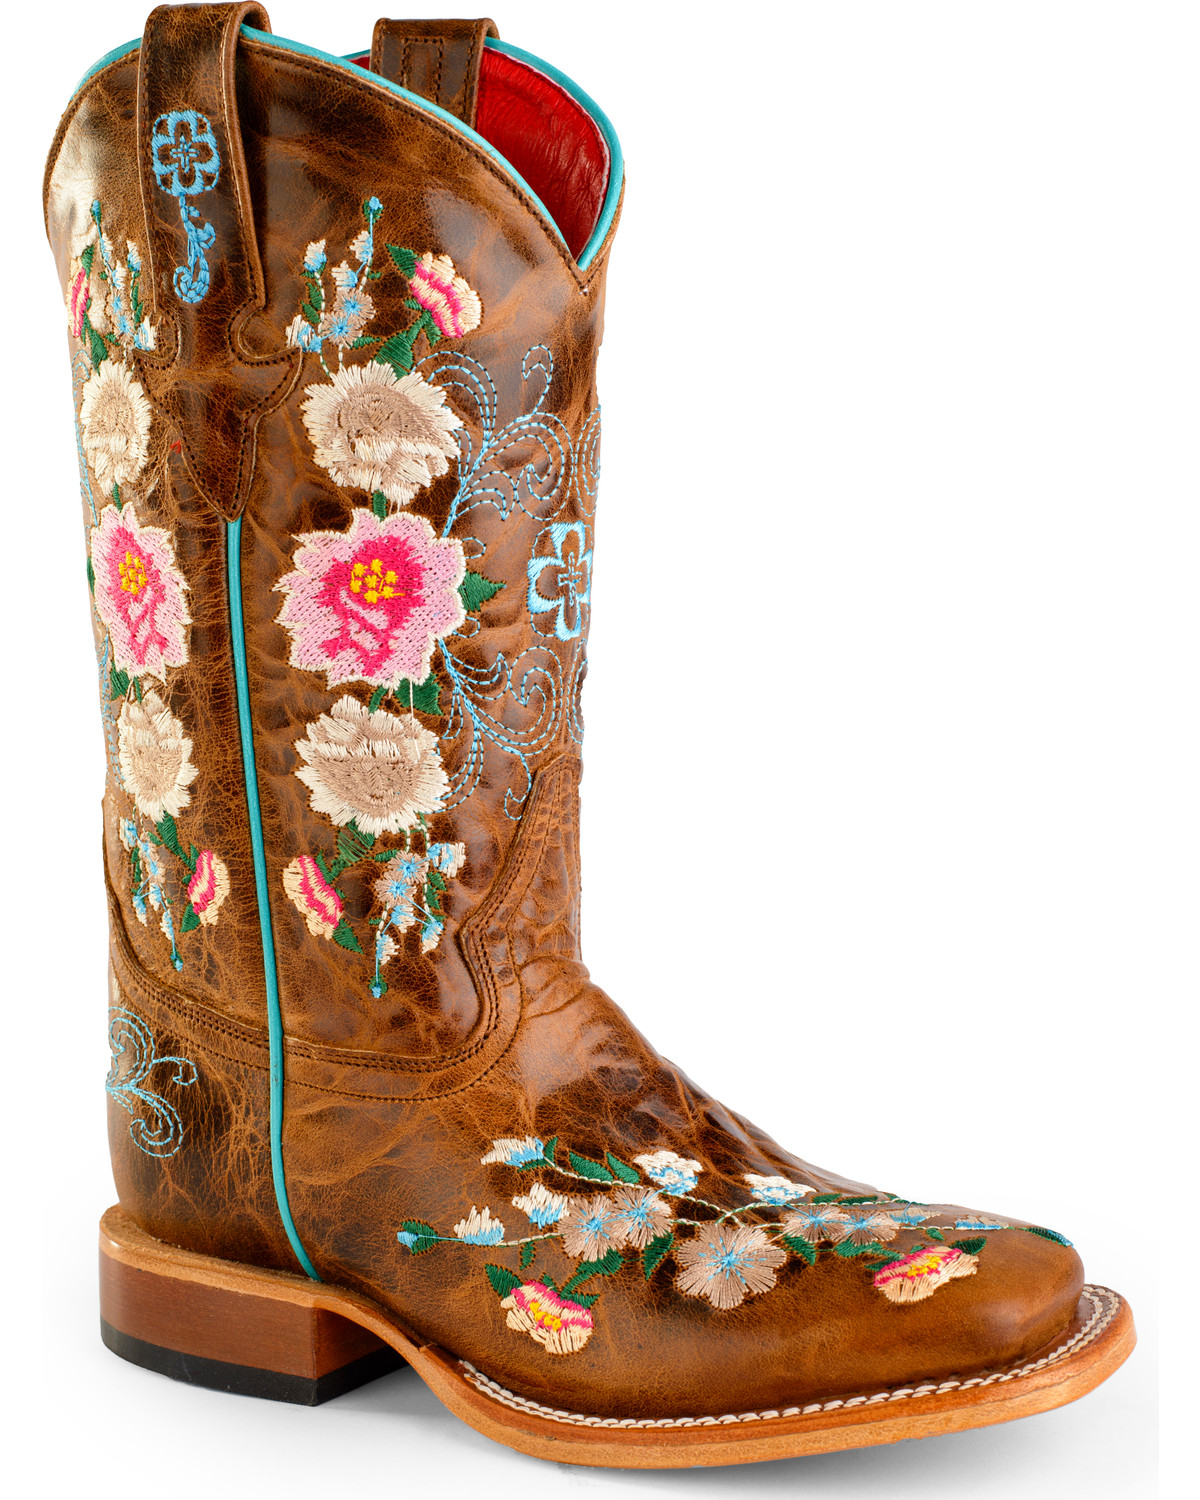 Macie Bean Little Girls' Honey Bunch Western Boots - Square Toe